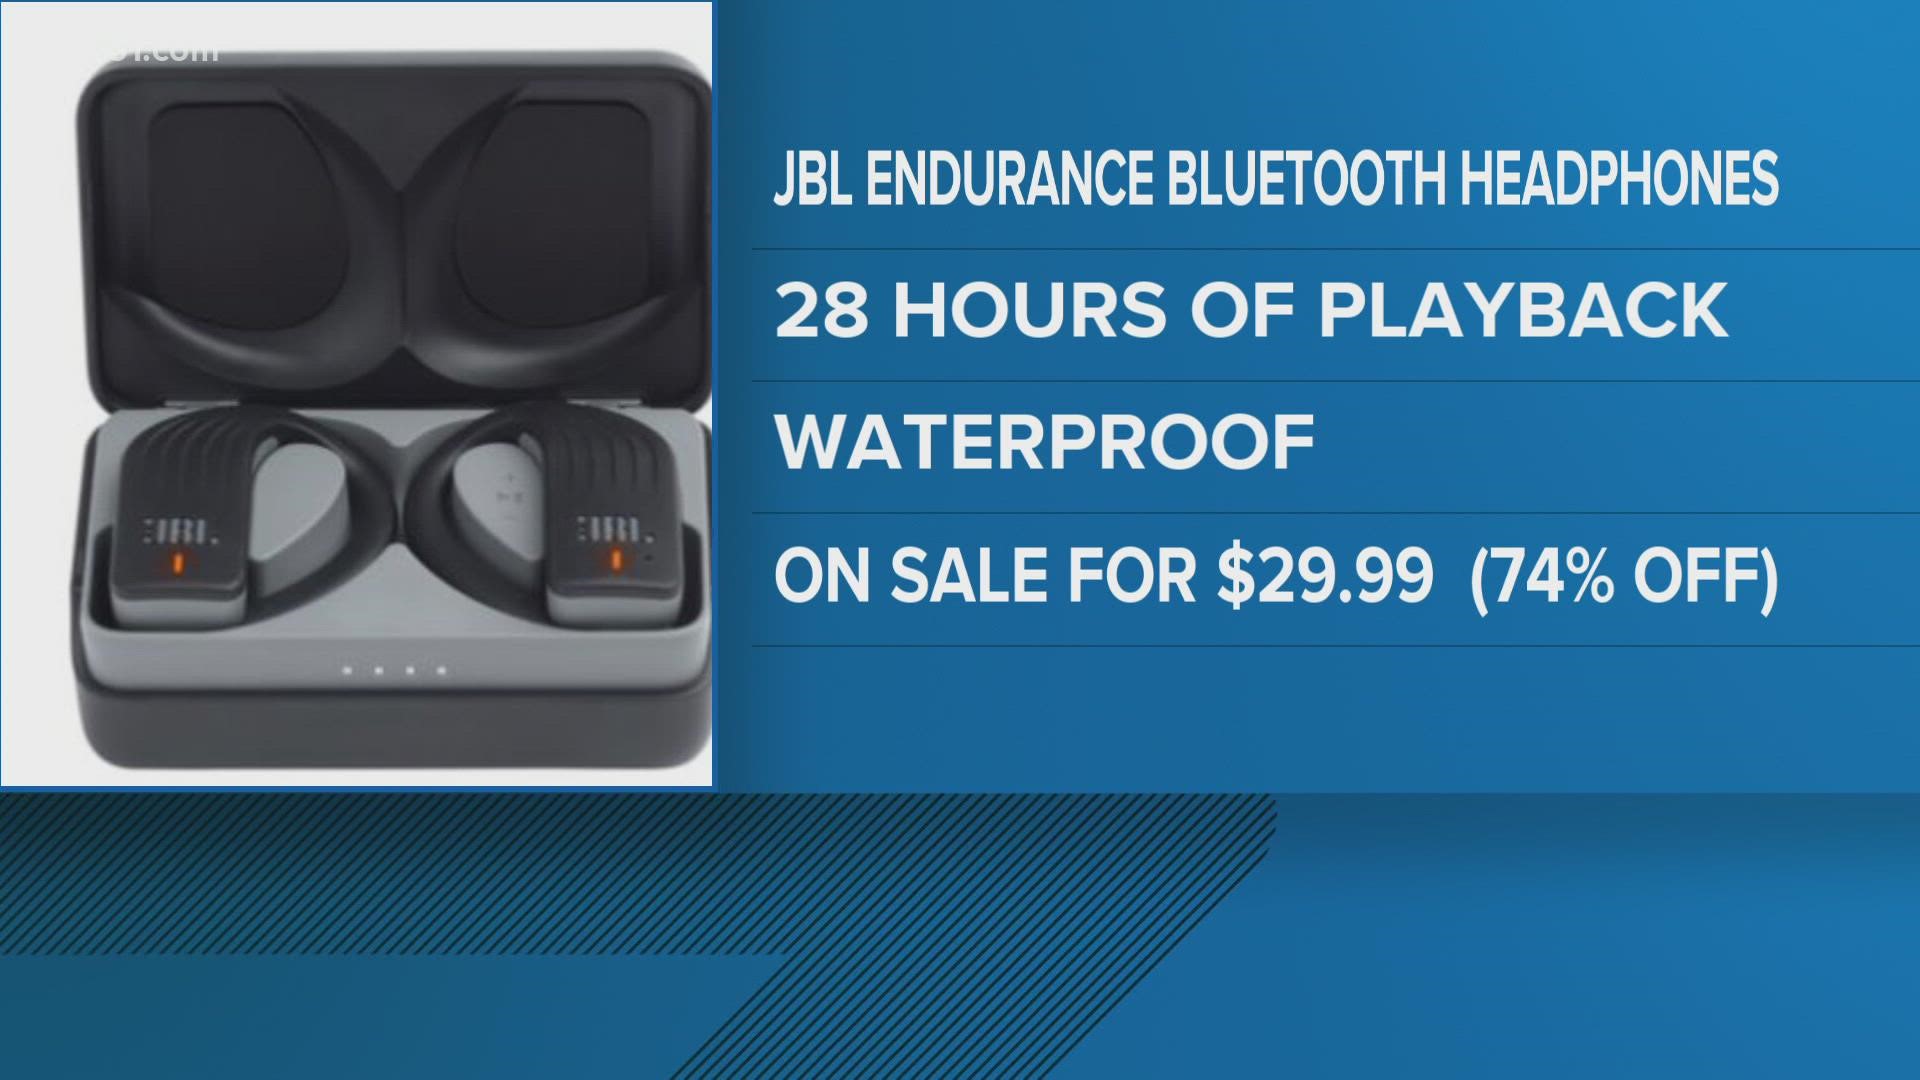 You can buy the JBL Bluetooth headphones at Ebay.com